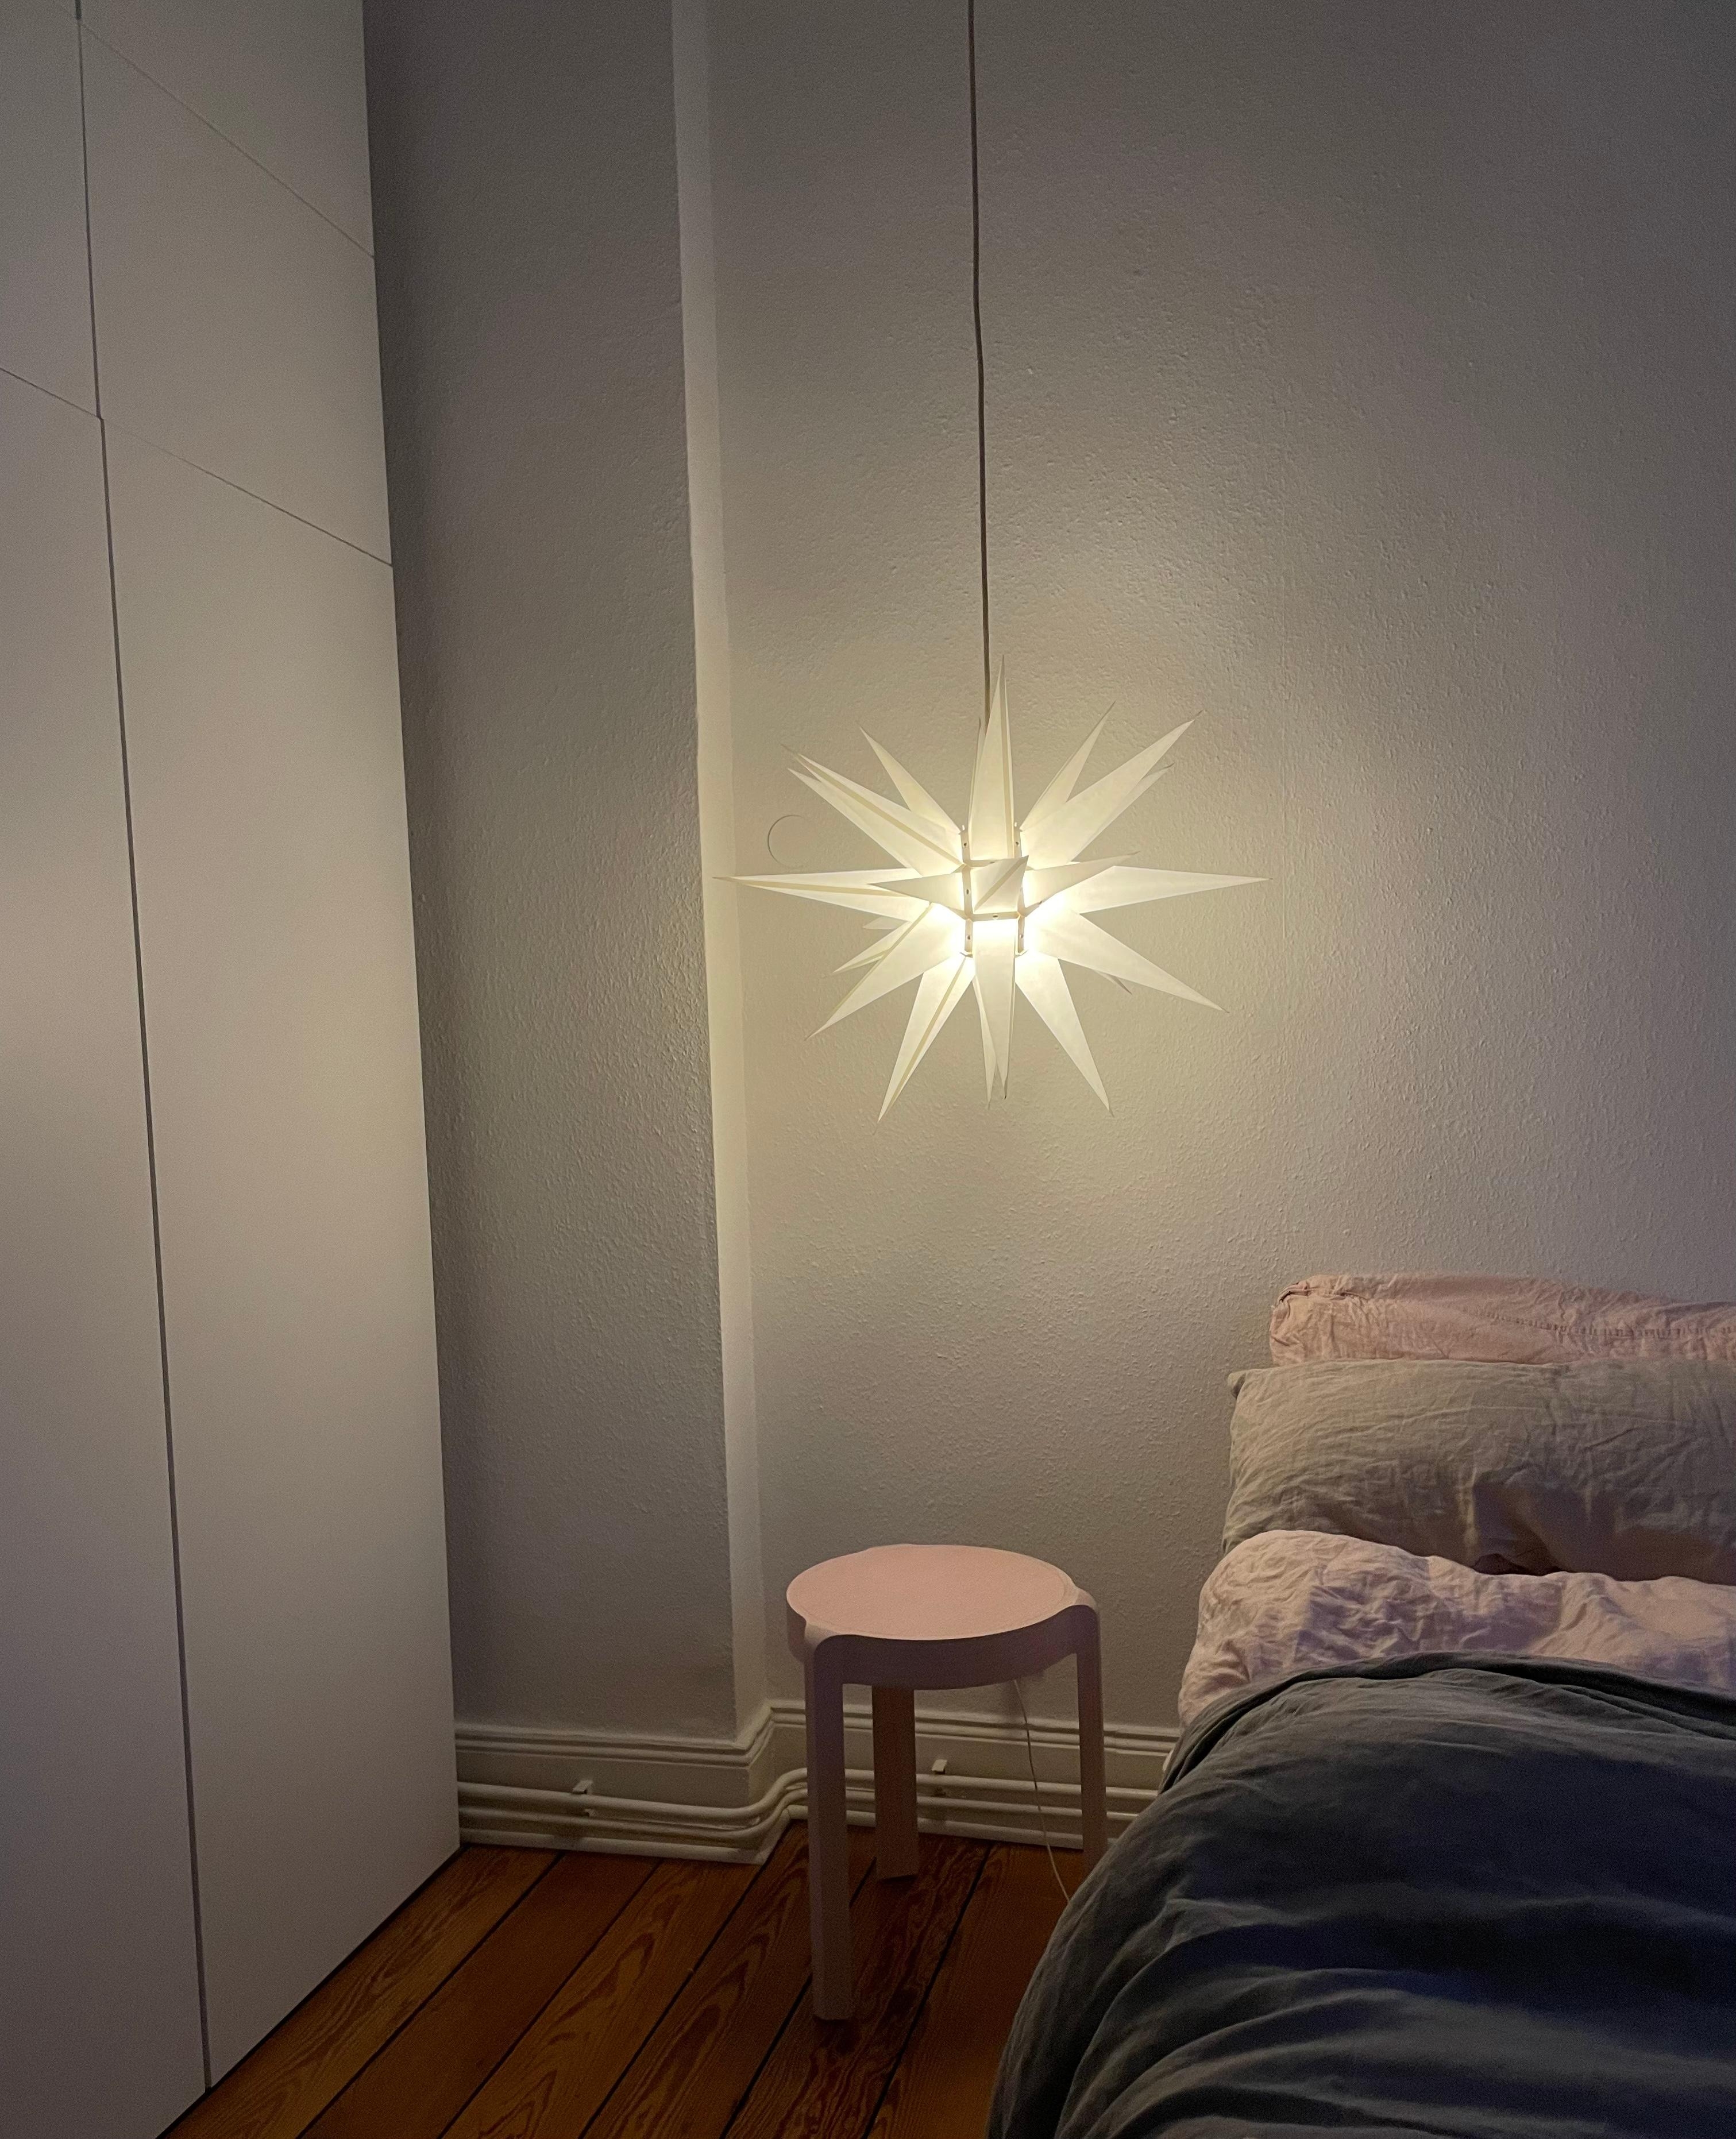 Gute Nacht 💤🌙😘 
#herrnhuterstern #bedroom #light 